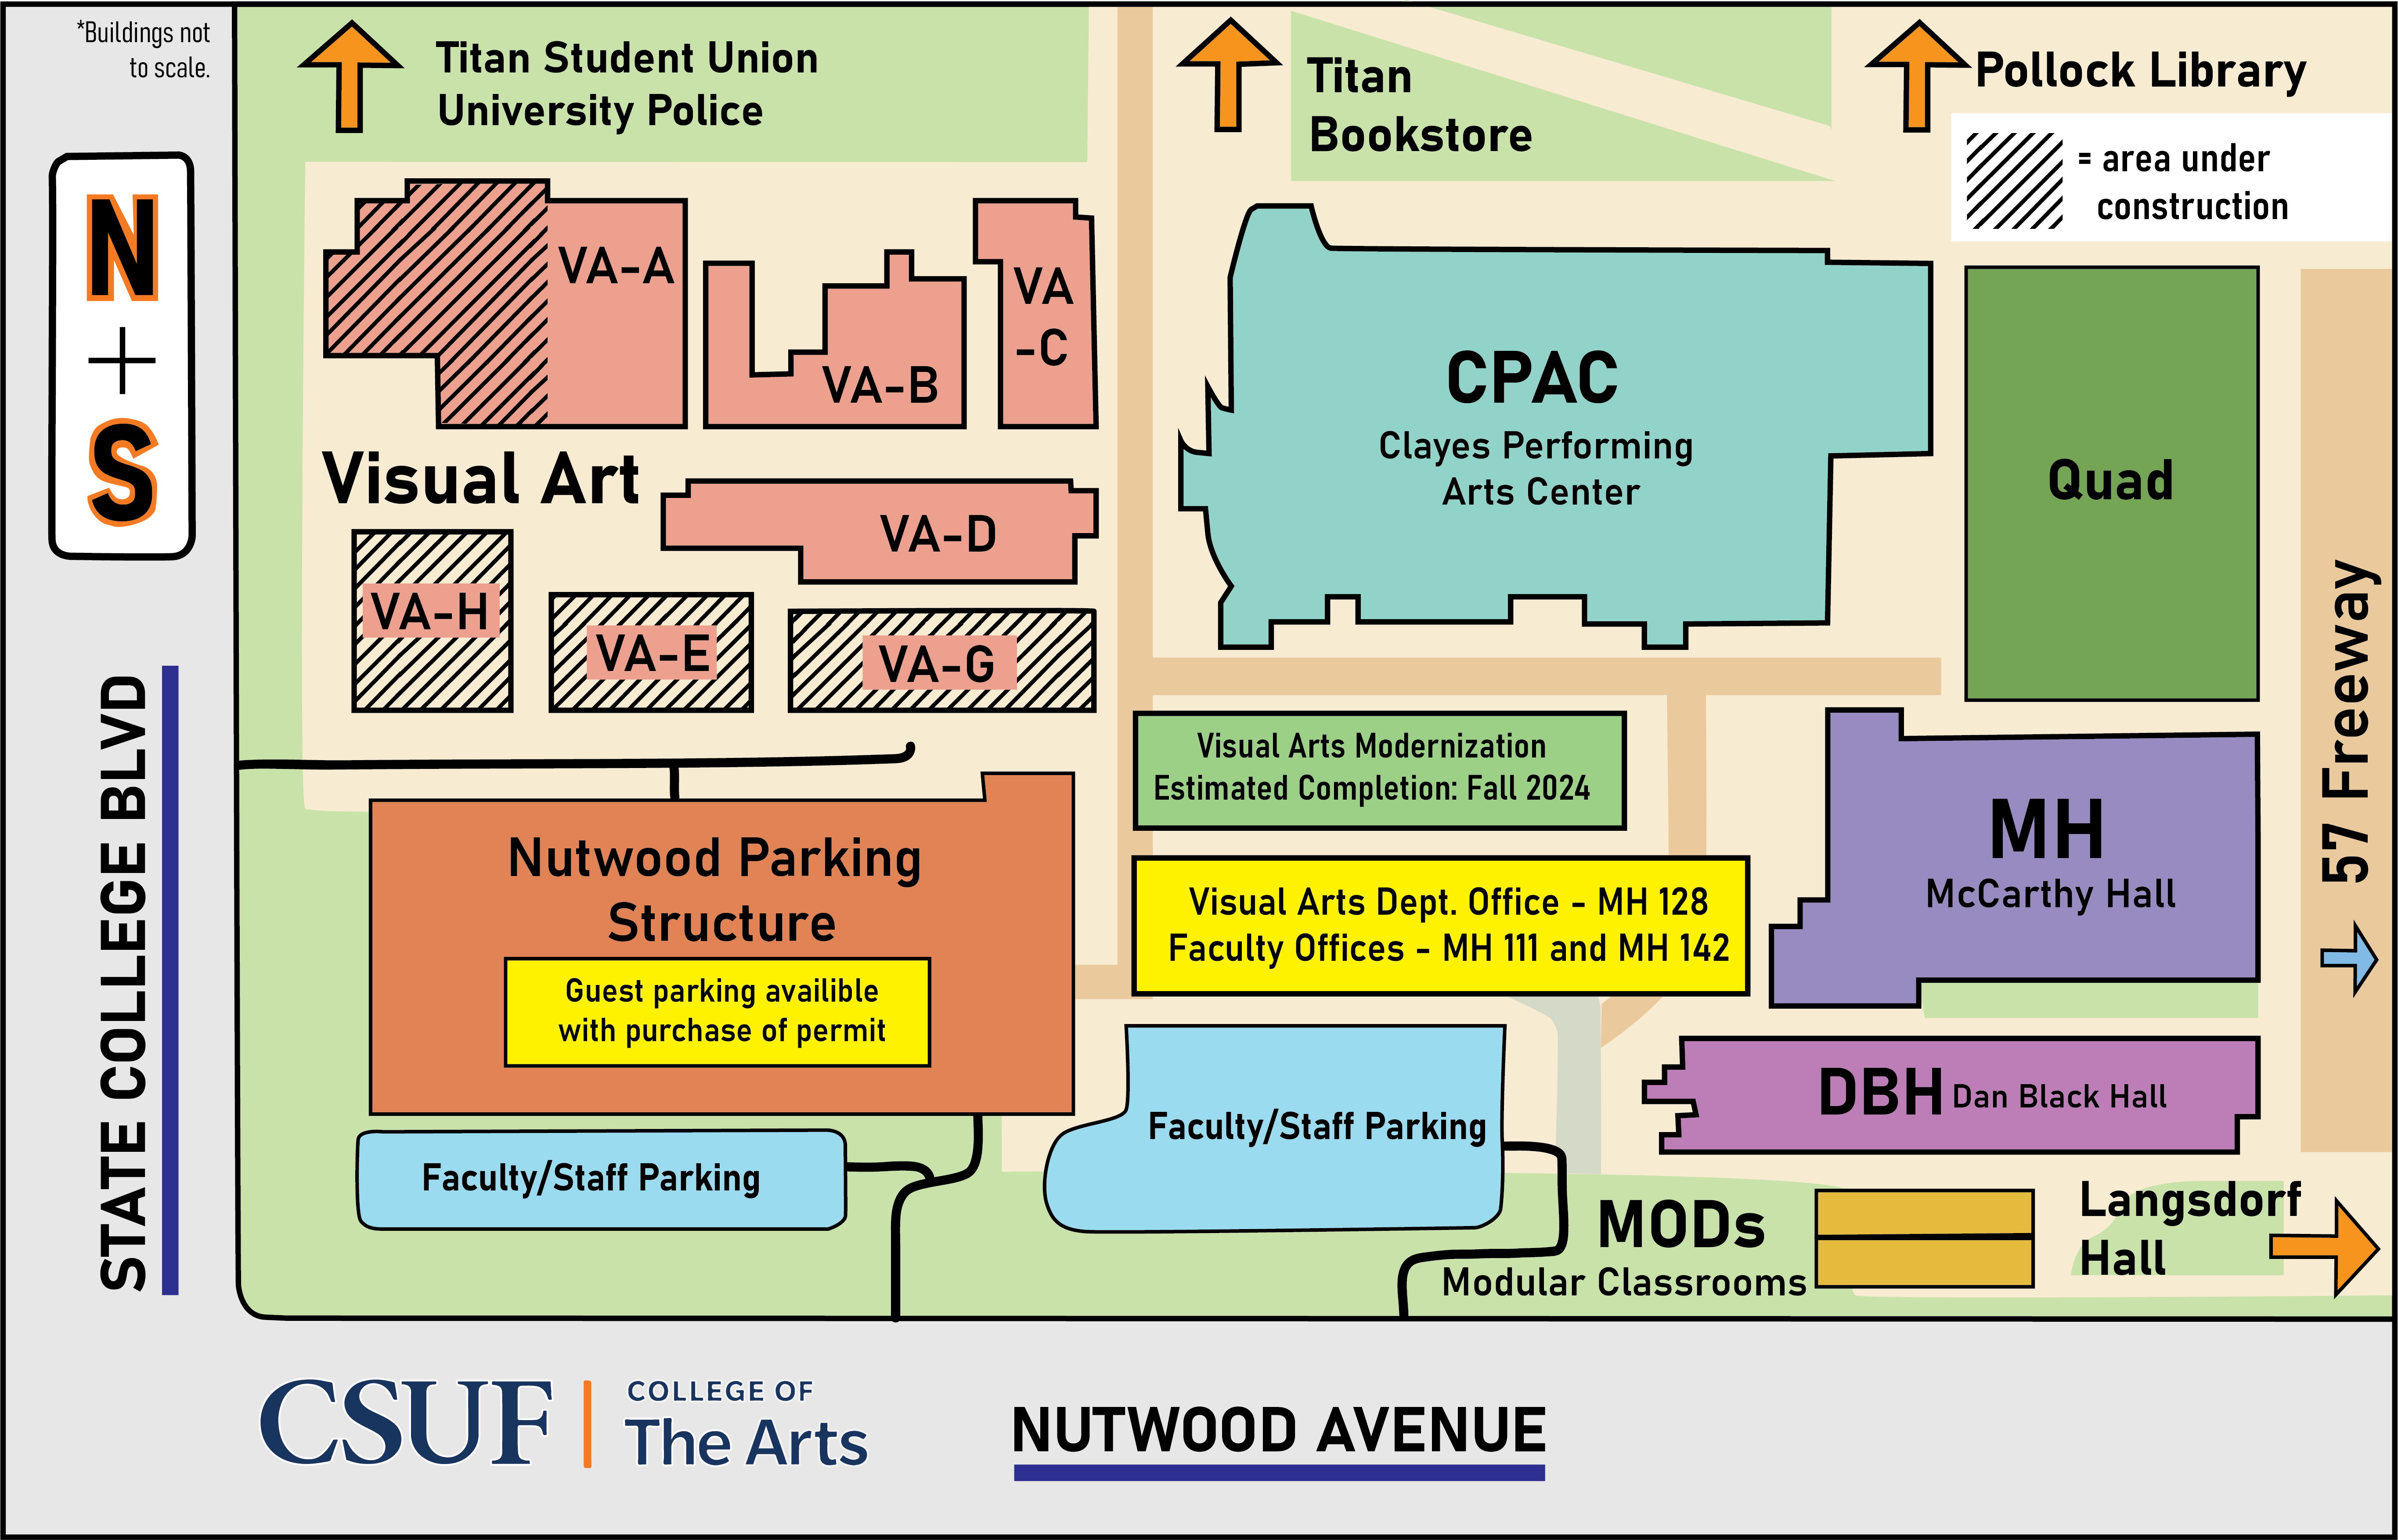 Visual Arts and campus locations